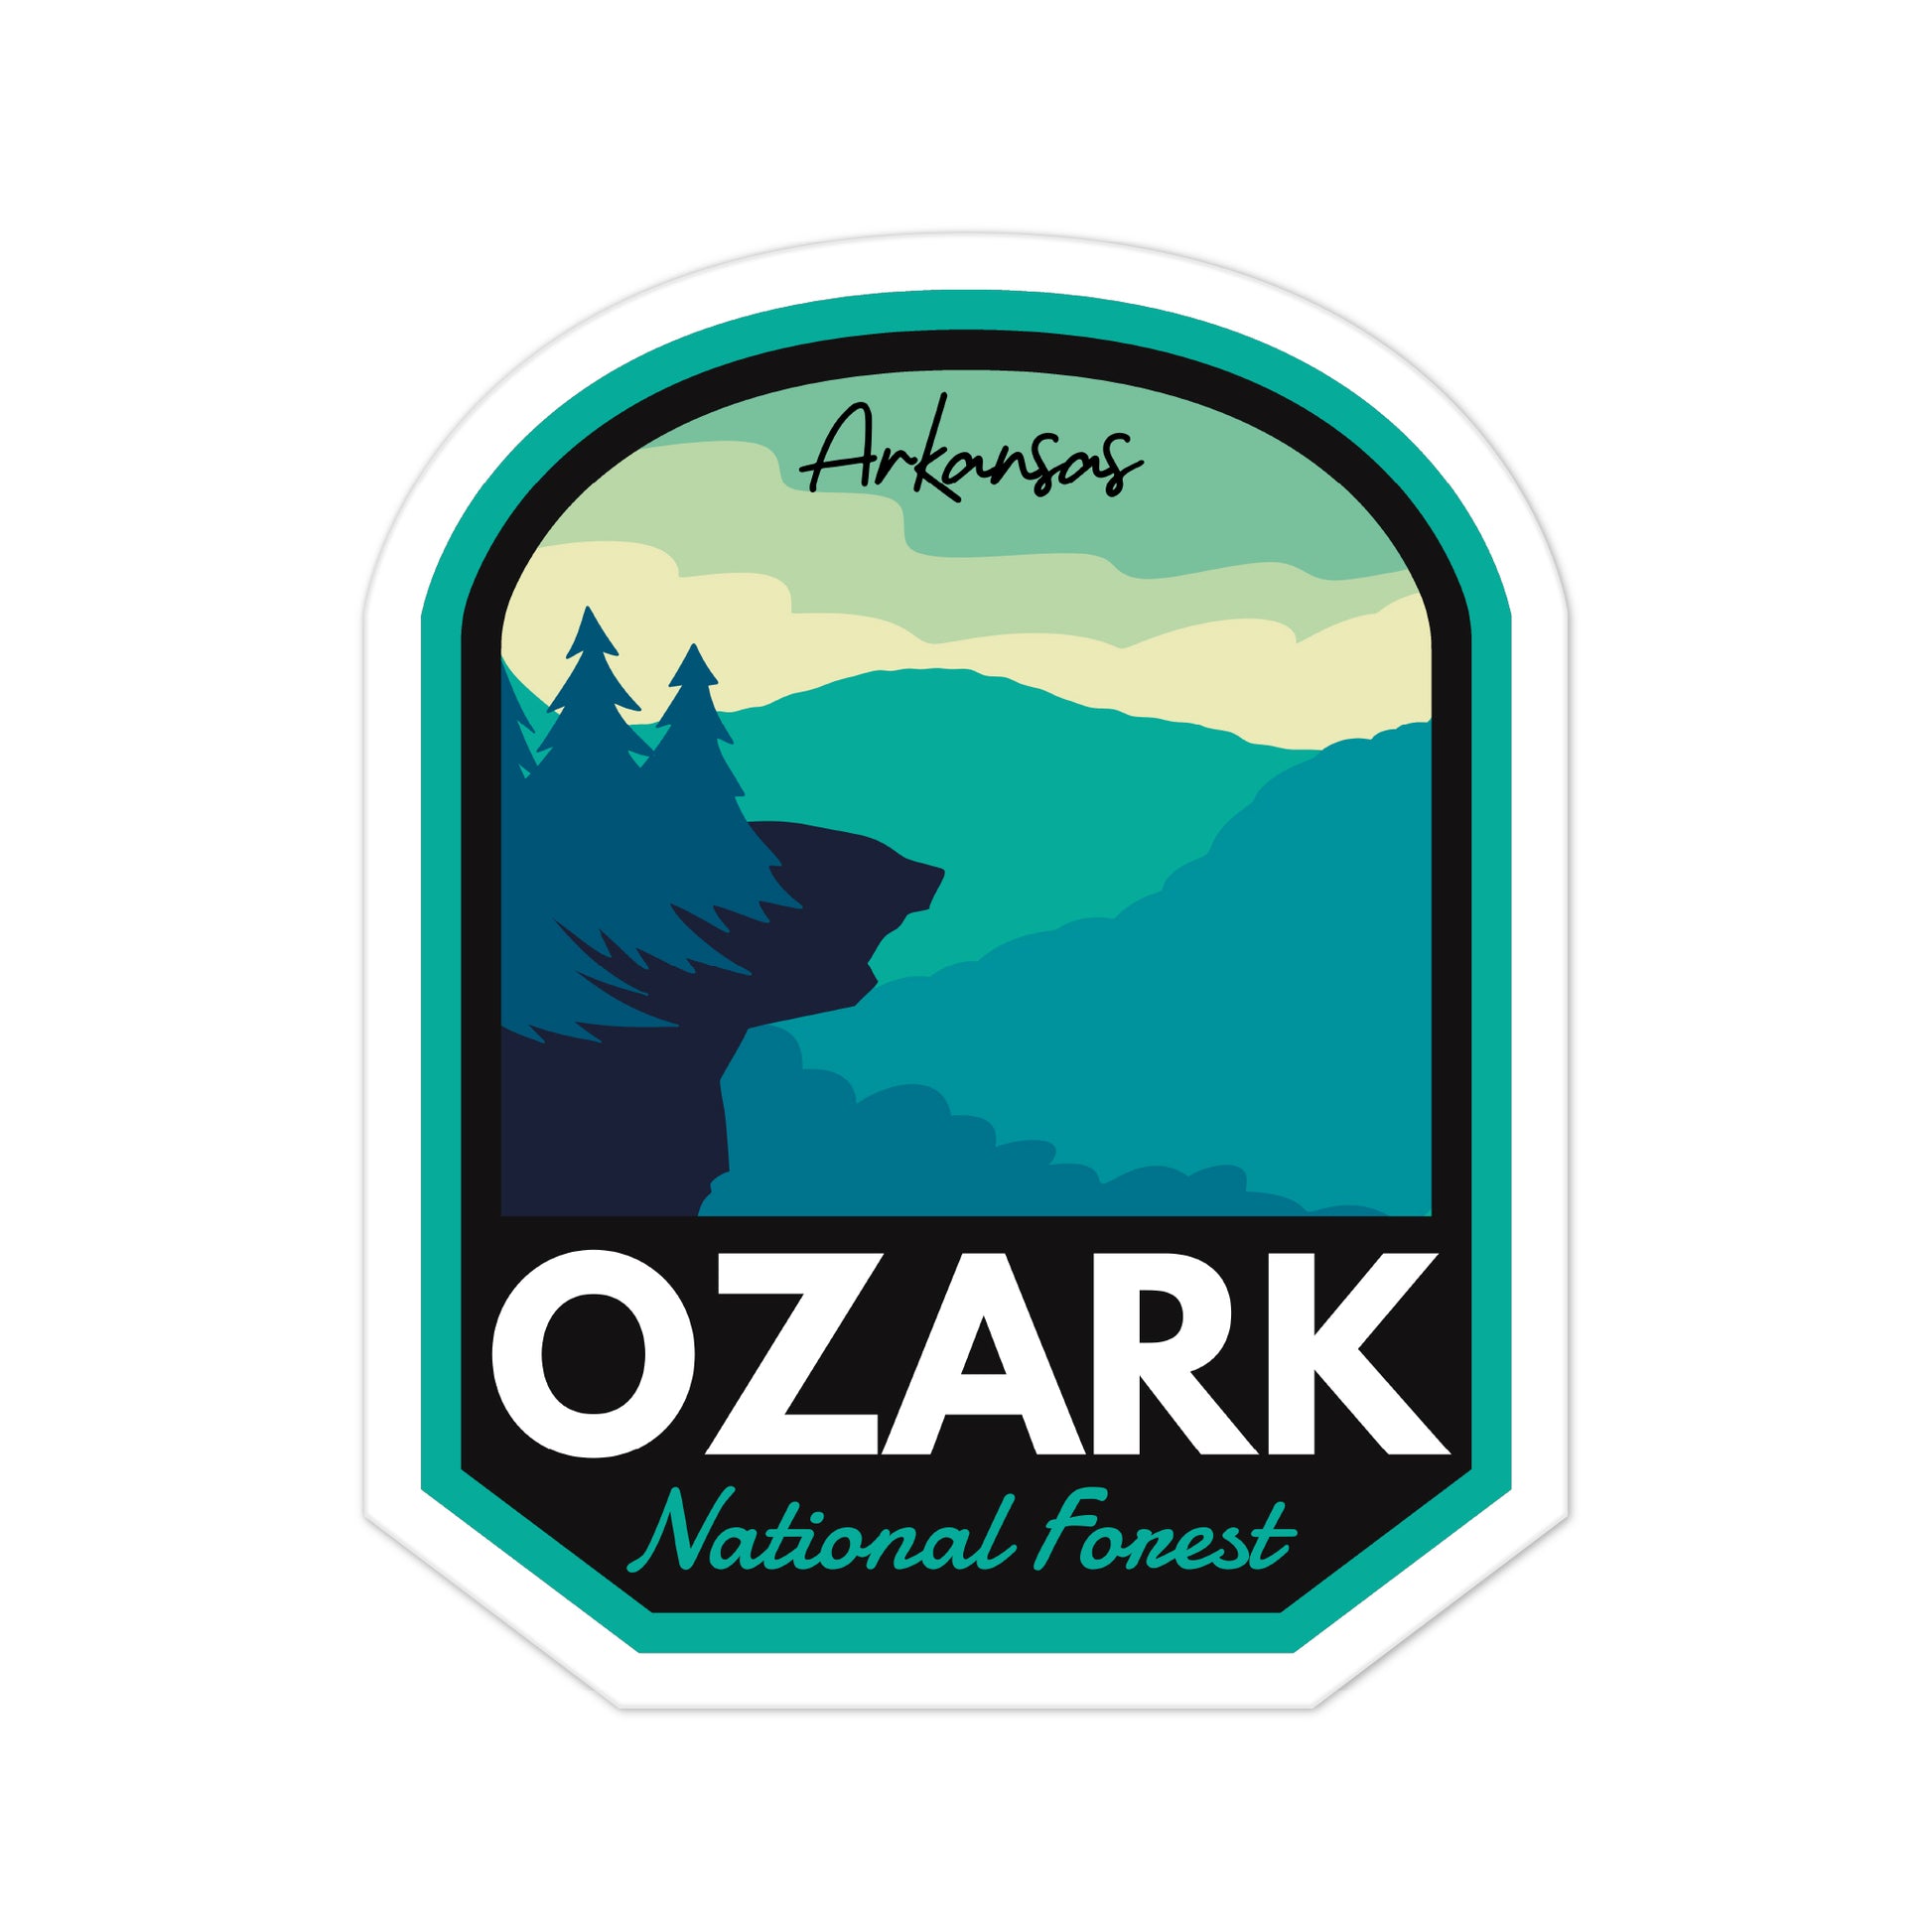 A sticker of Ozark National Forest